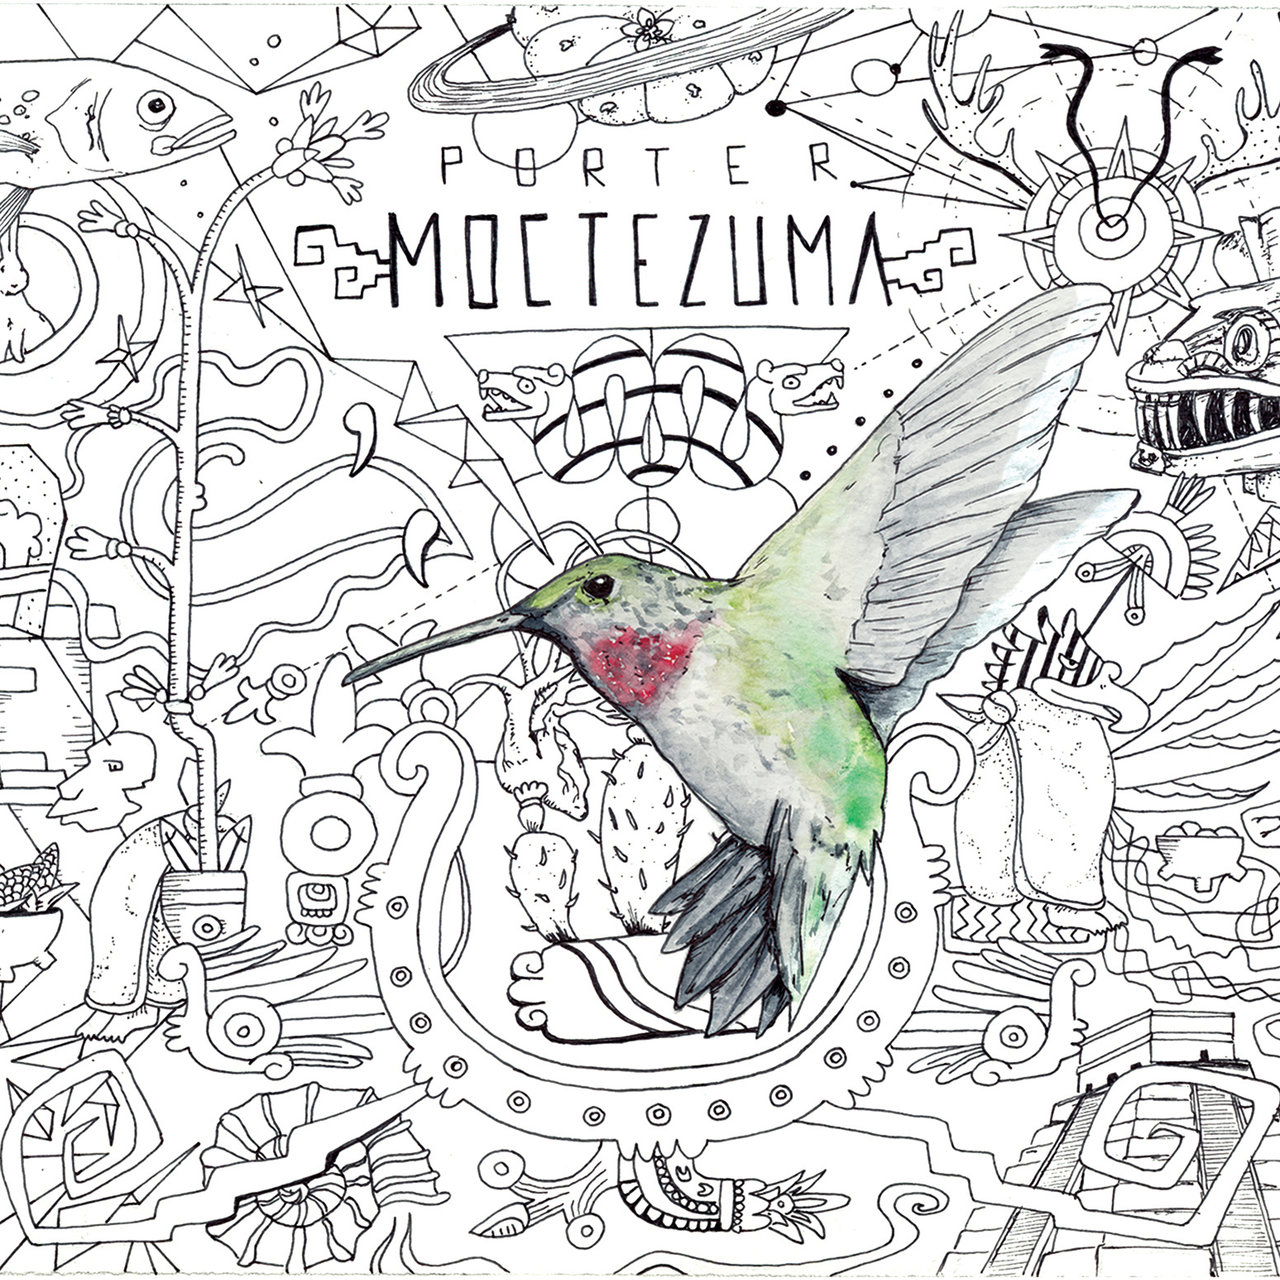 Porter Moctezuma cover artwork